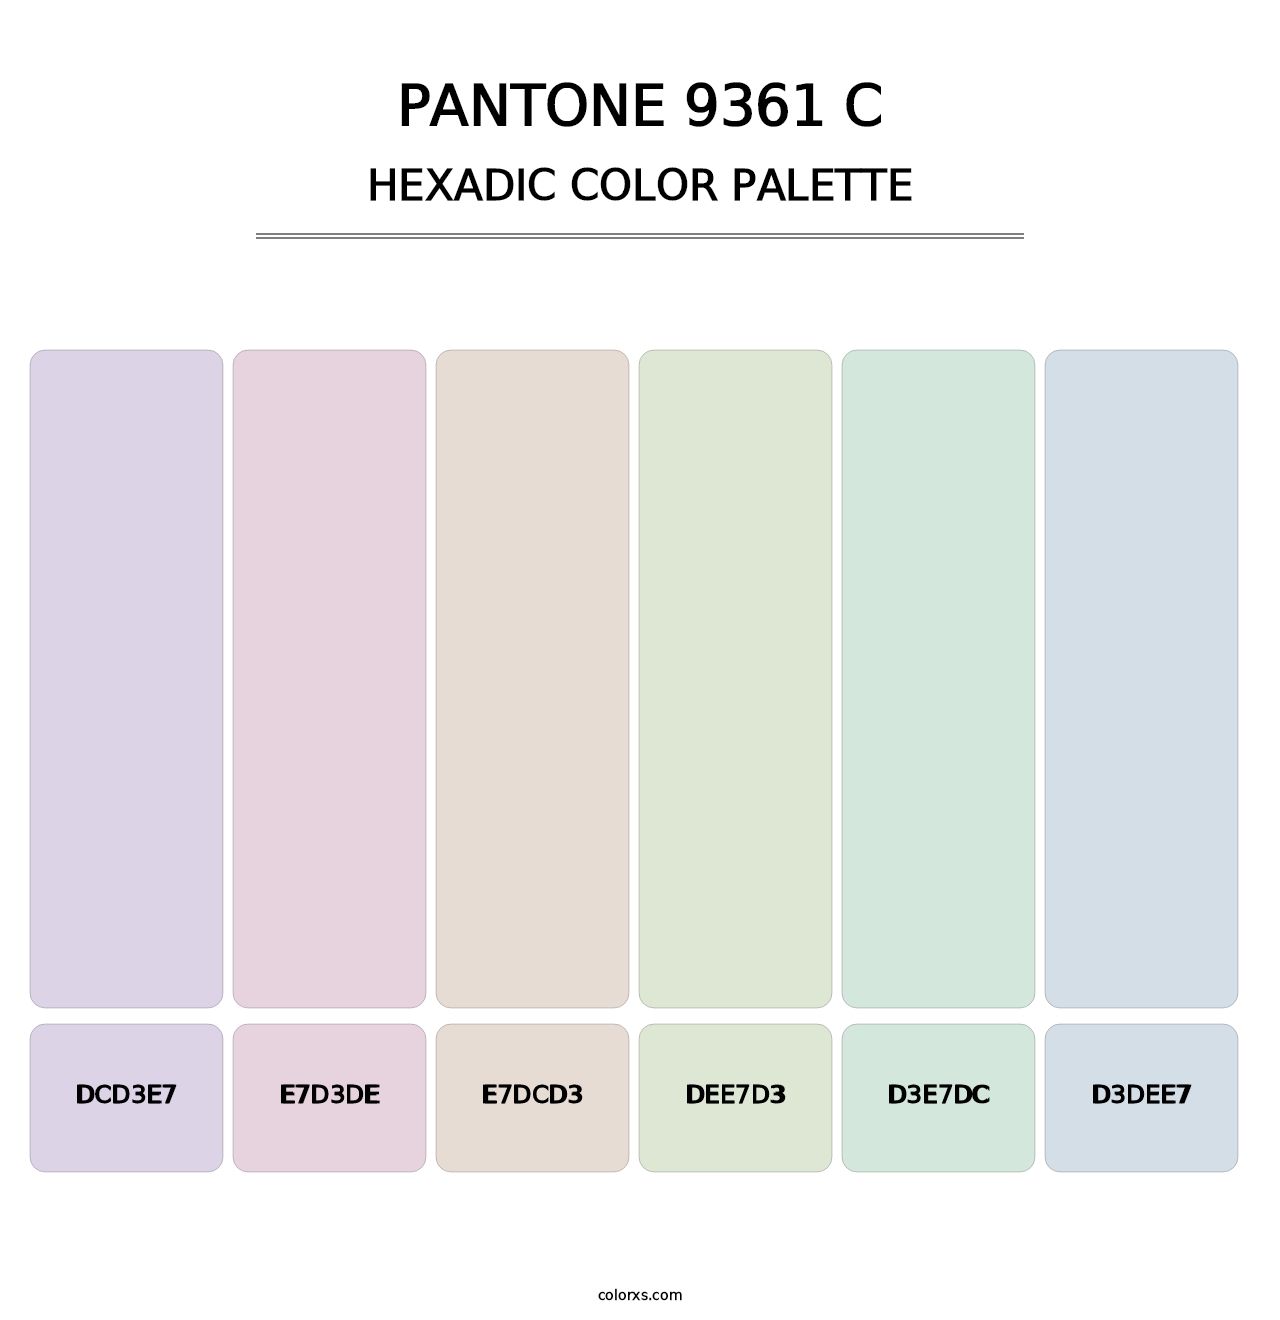 PANTONE 9361 C - Hexadic Color Palette